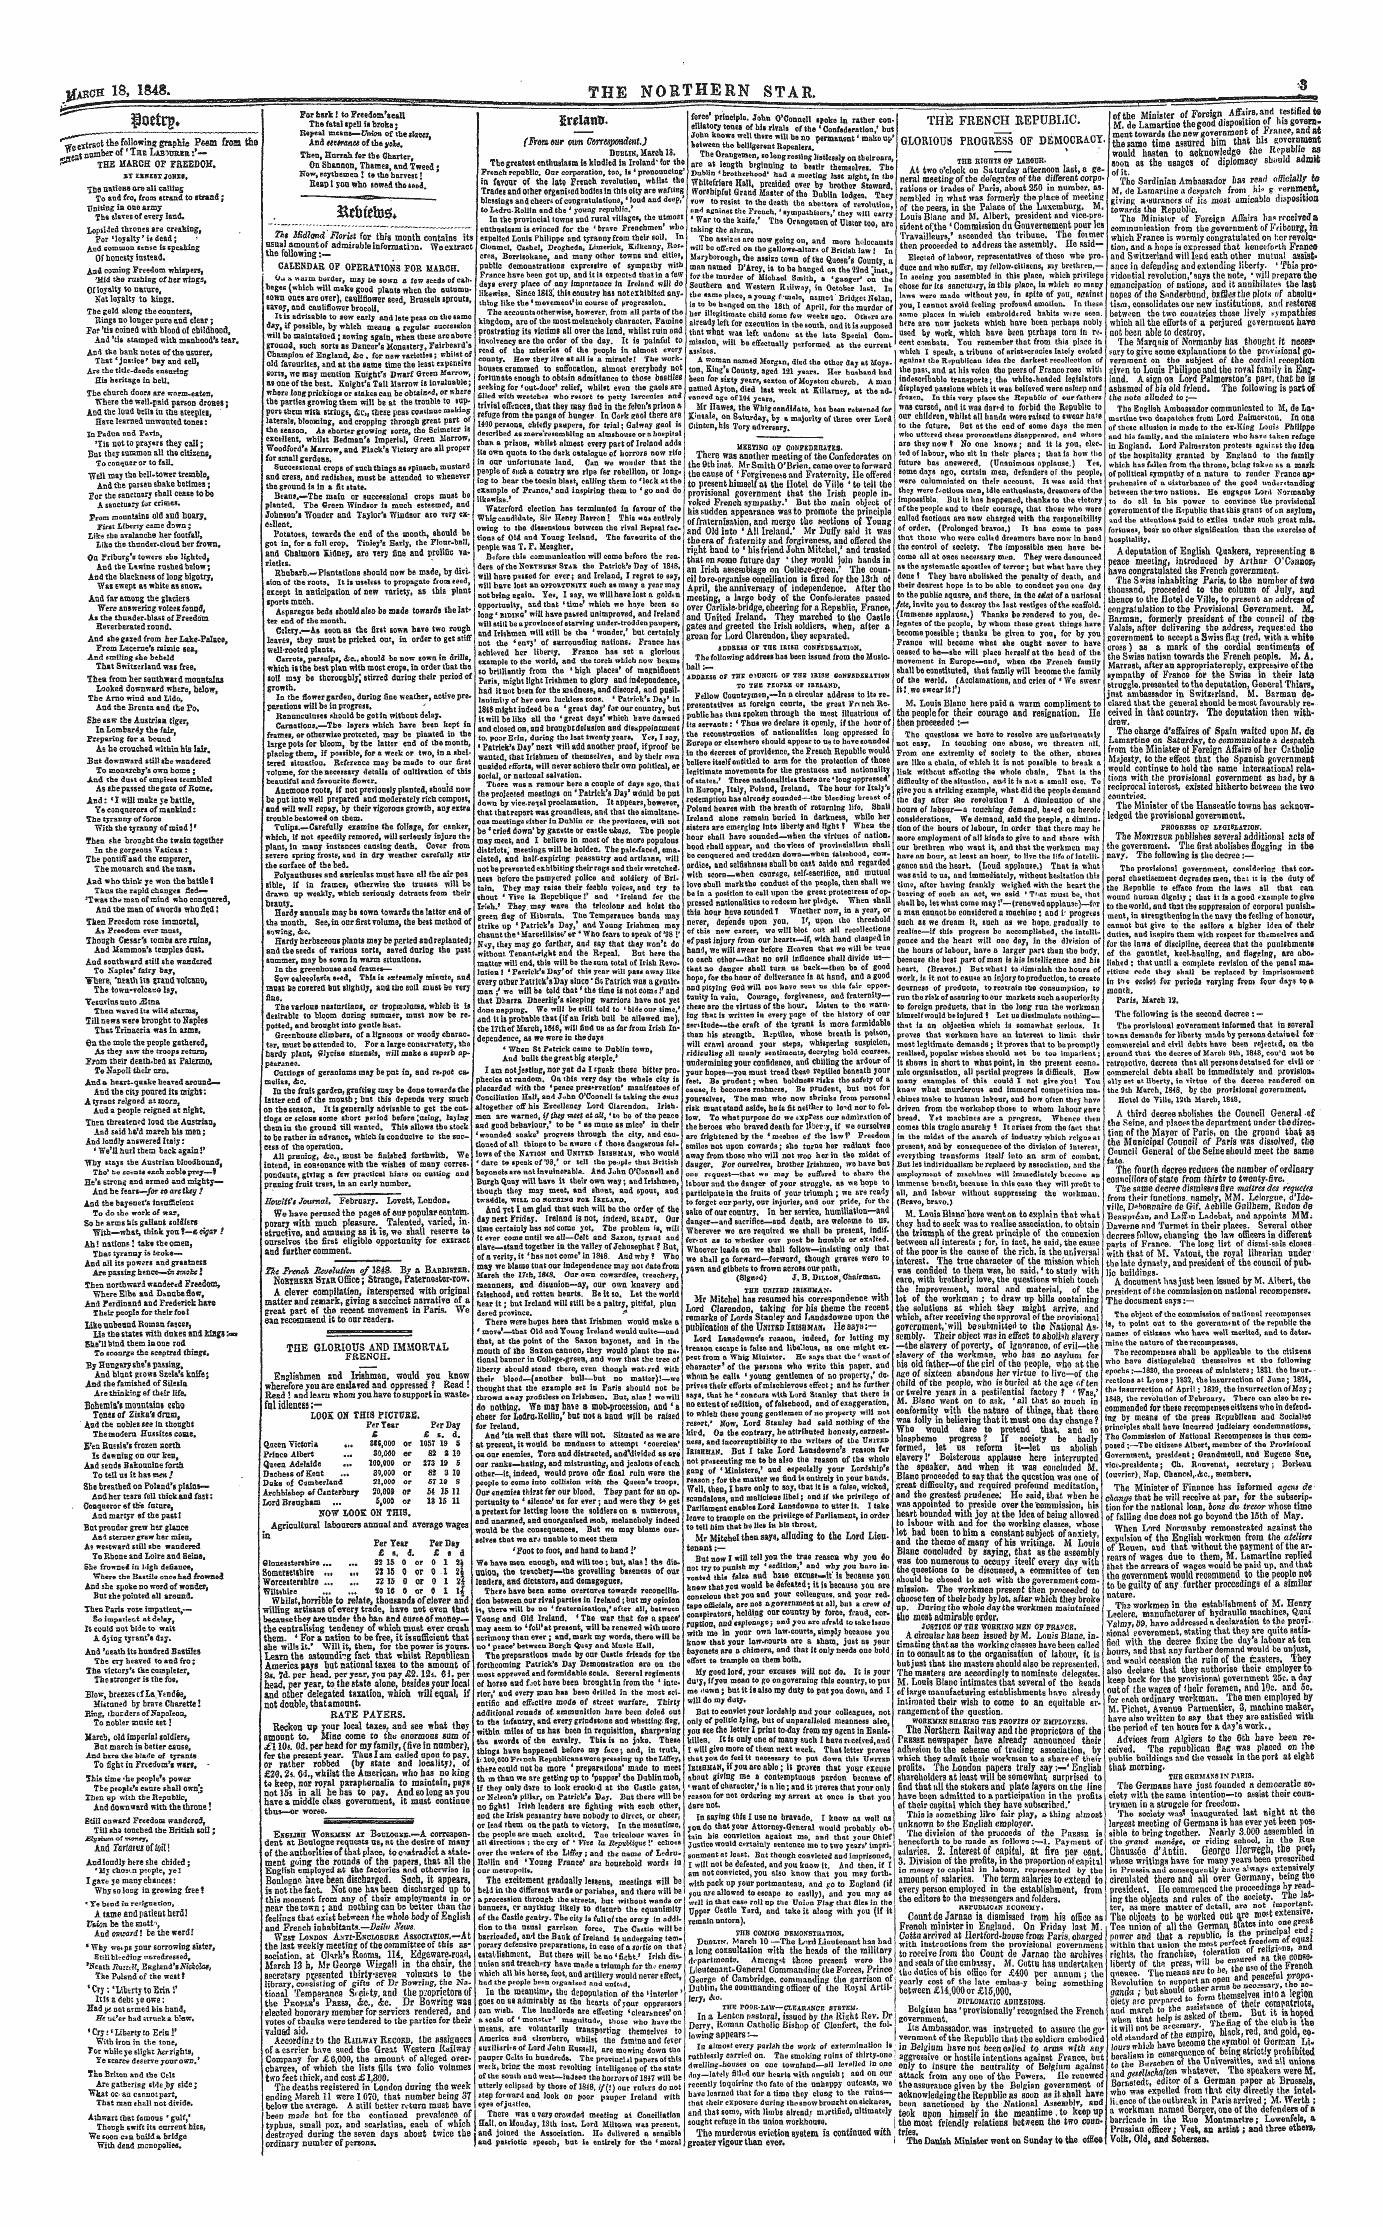 Northern Star (1837-1852): jS F Y, 1st edition - Srelanu.